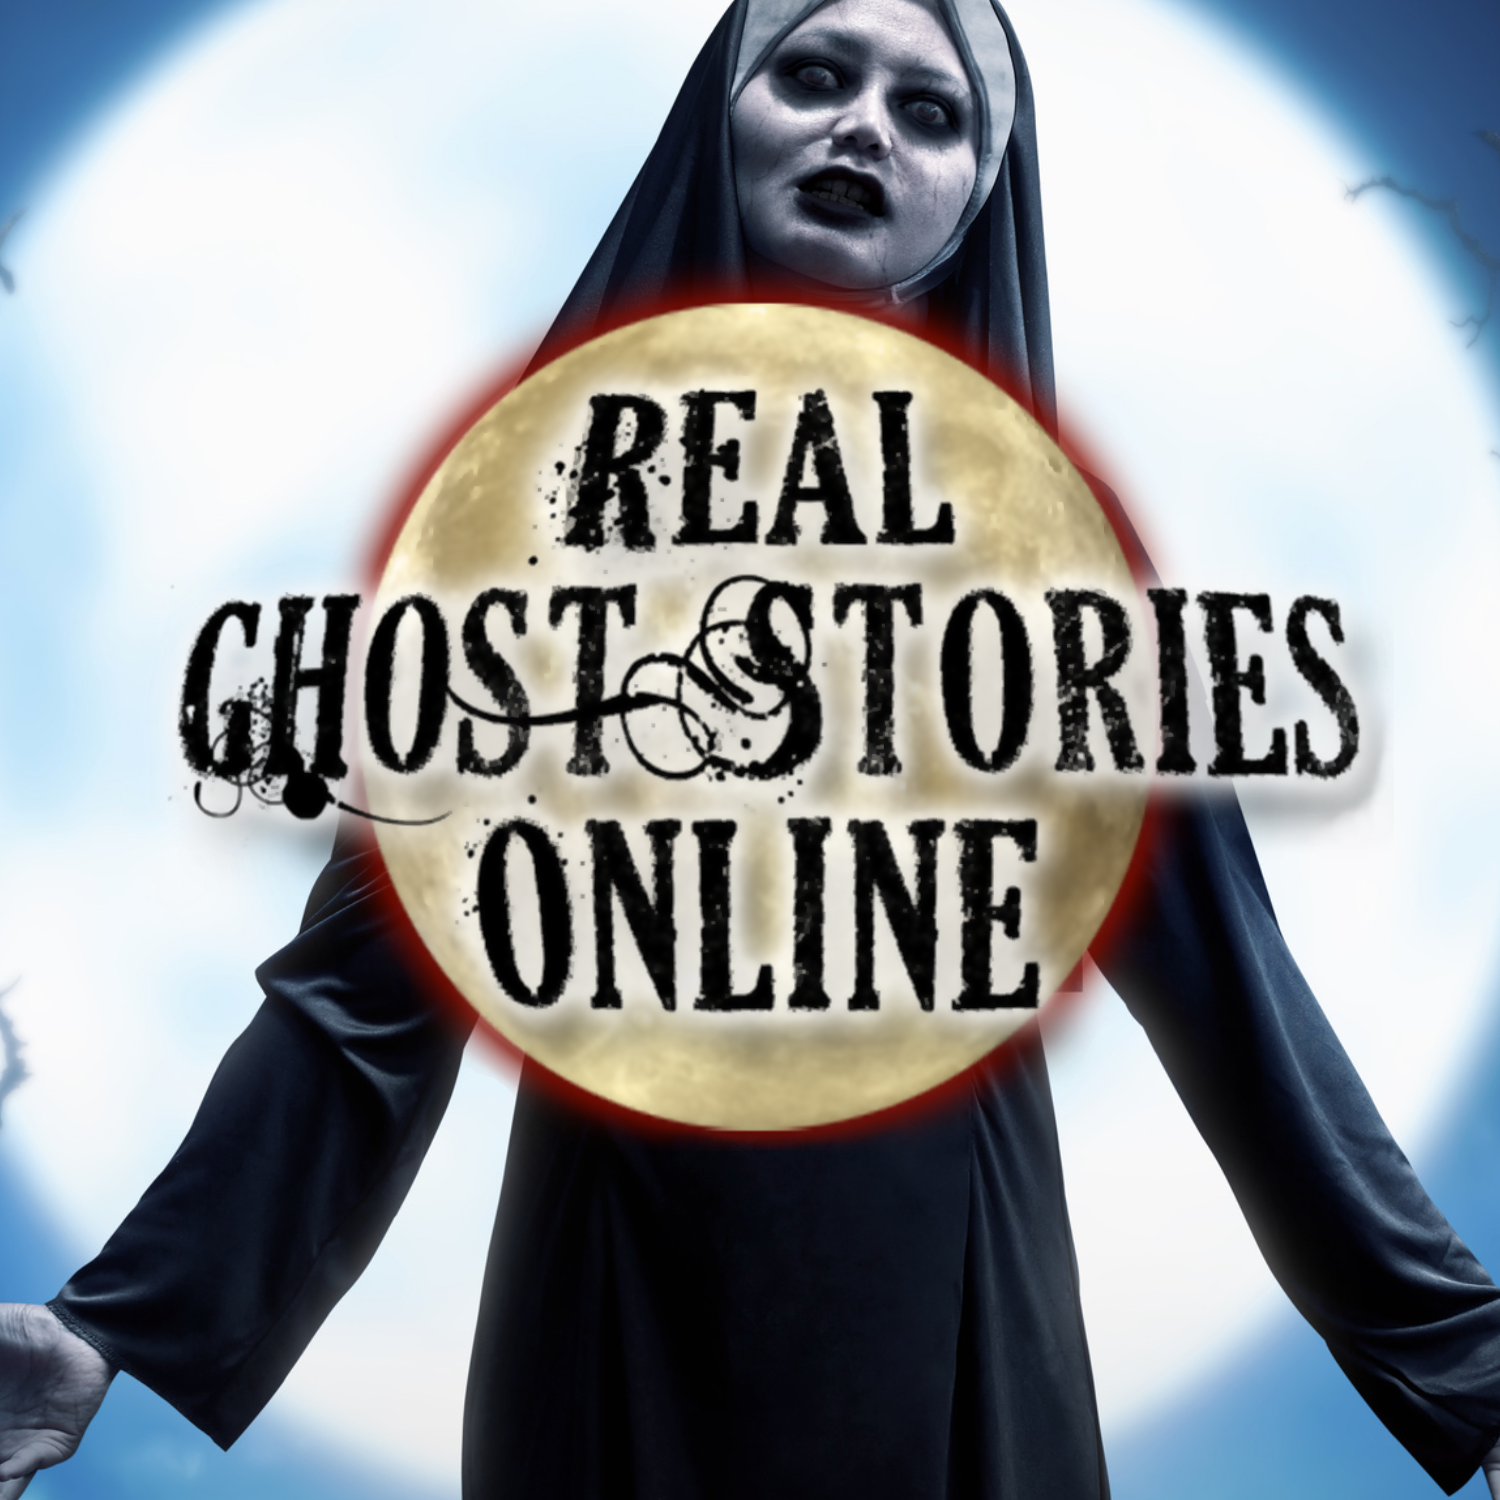 Acting Strange | #TrueGhostStory #GhostStories #HorrorPodcast